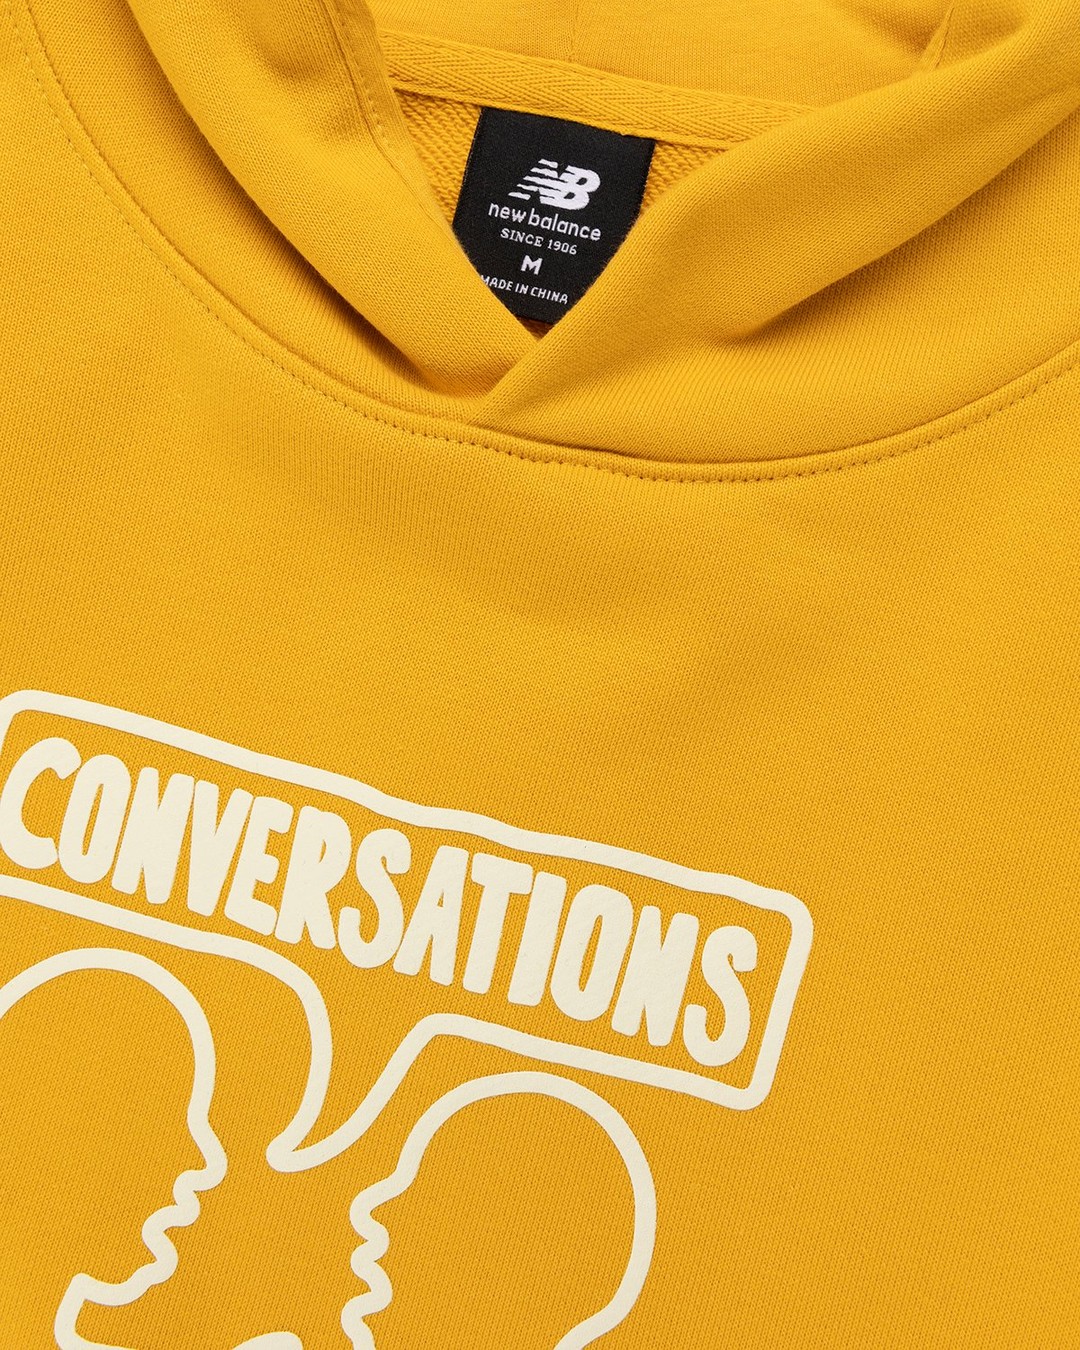 New Balance – Conversations Amongst Us Hoodie Aspen Yellow - Hoodies - Yellow - Image 4